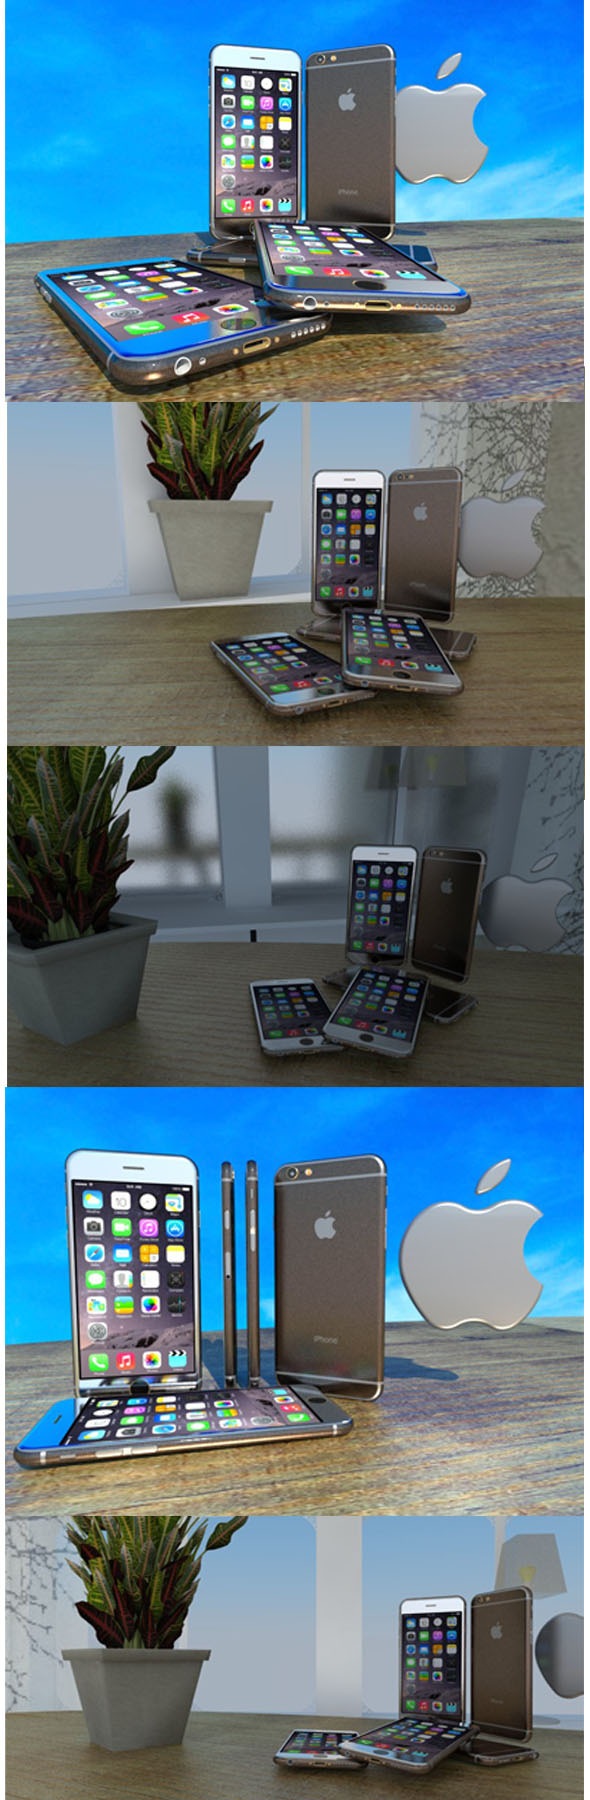 Apples iPhone 6 - 3Docean 12499333